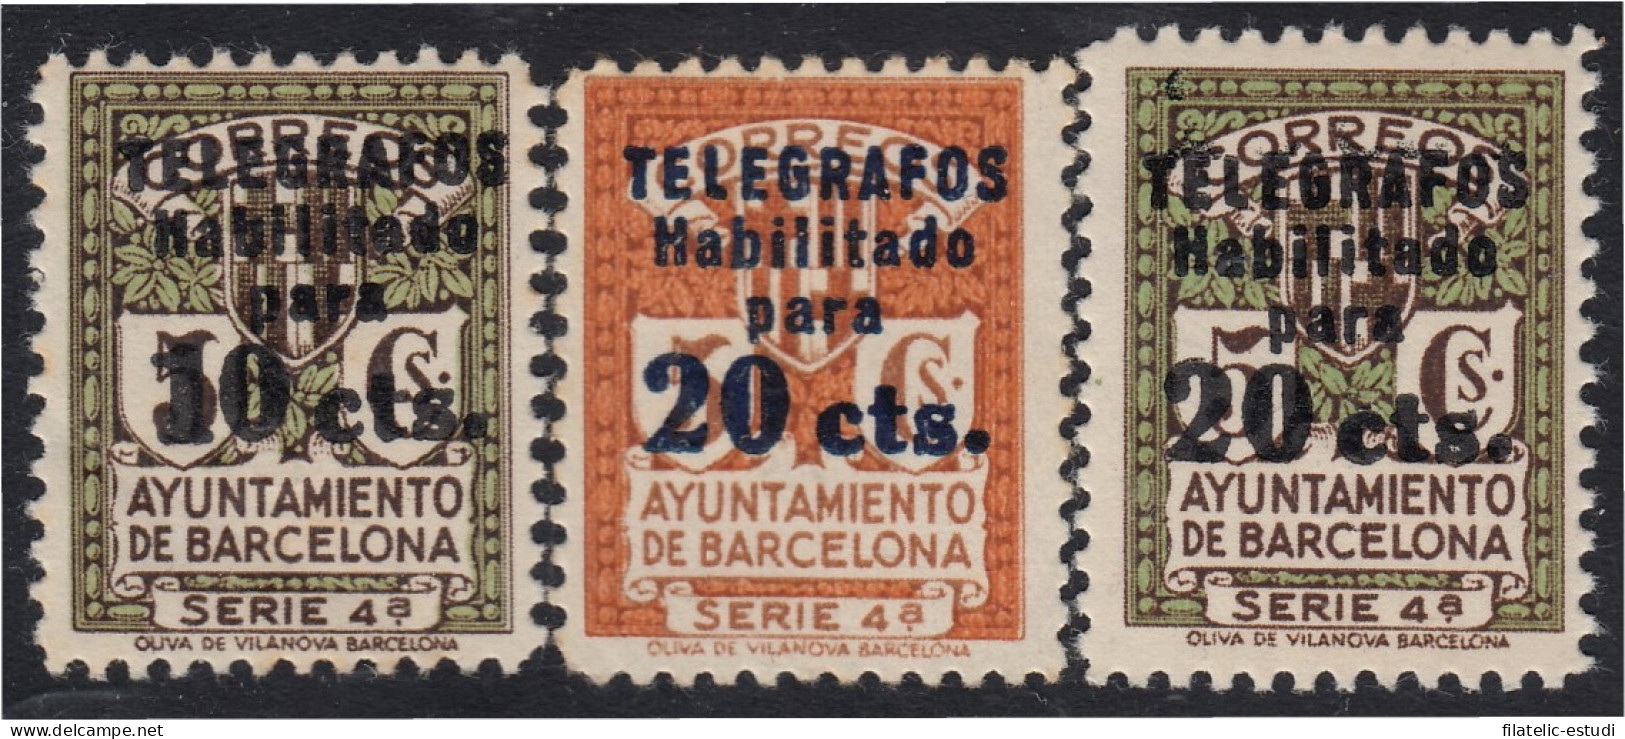 Barcelona Telégrafos 10/12 1936-38 Ayuntamiento De Barcelona MNH - Barcelona